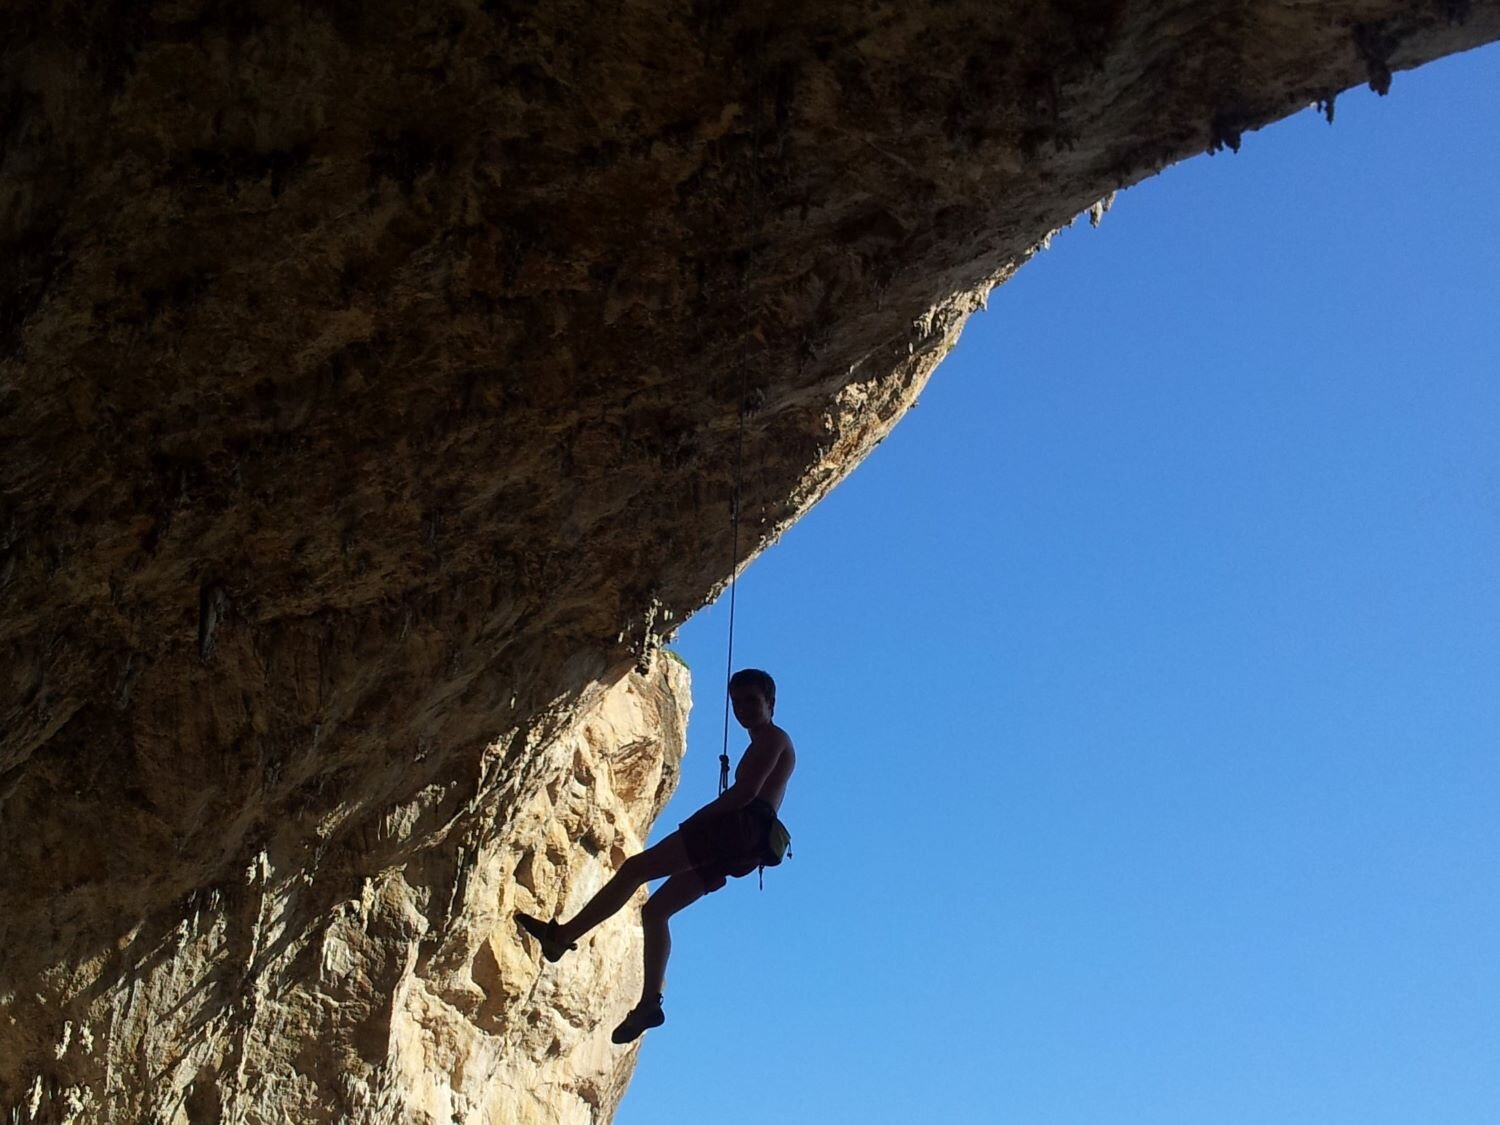 S 13.10 Rees Sardinia rock climbing 02 cropped 1500px.jpg